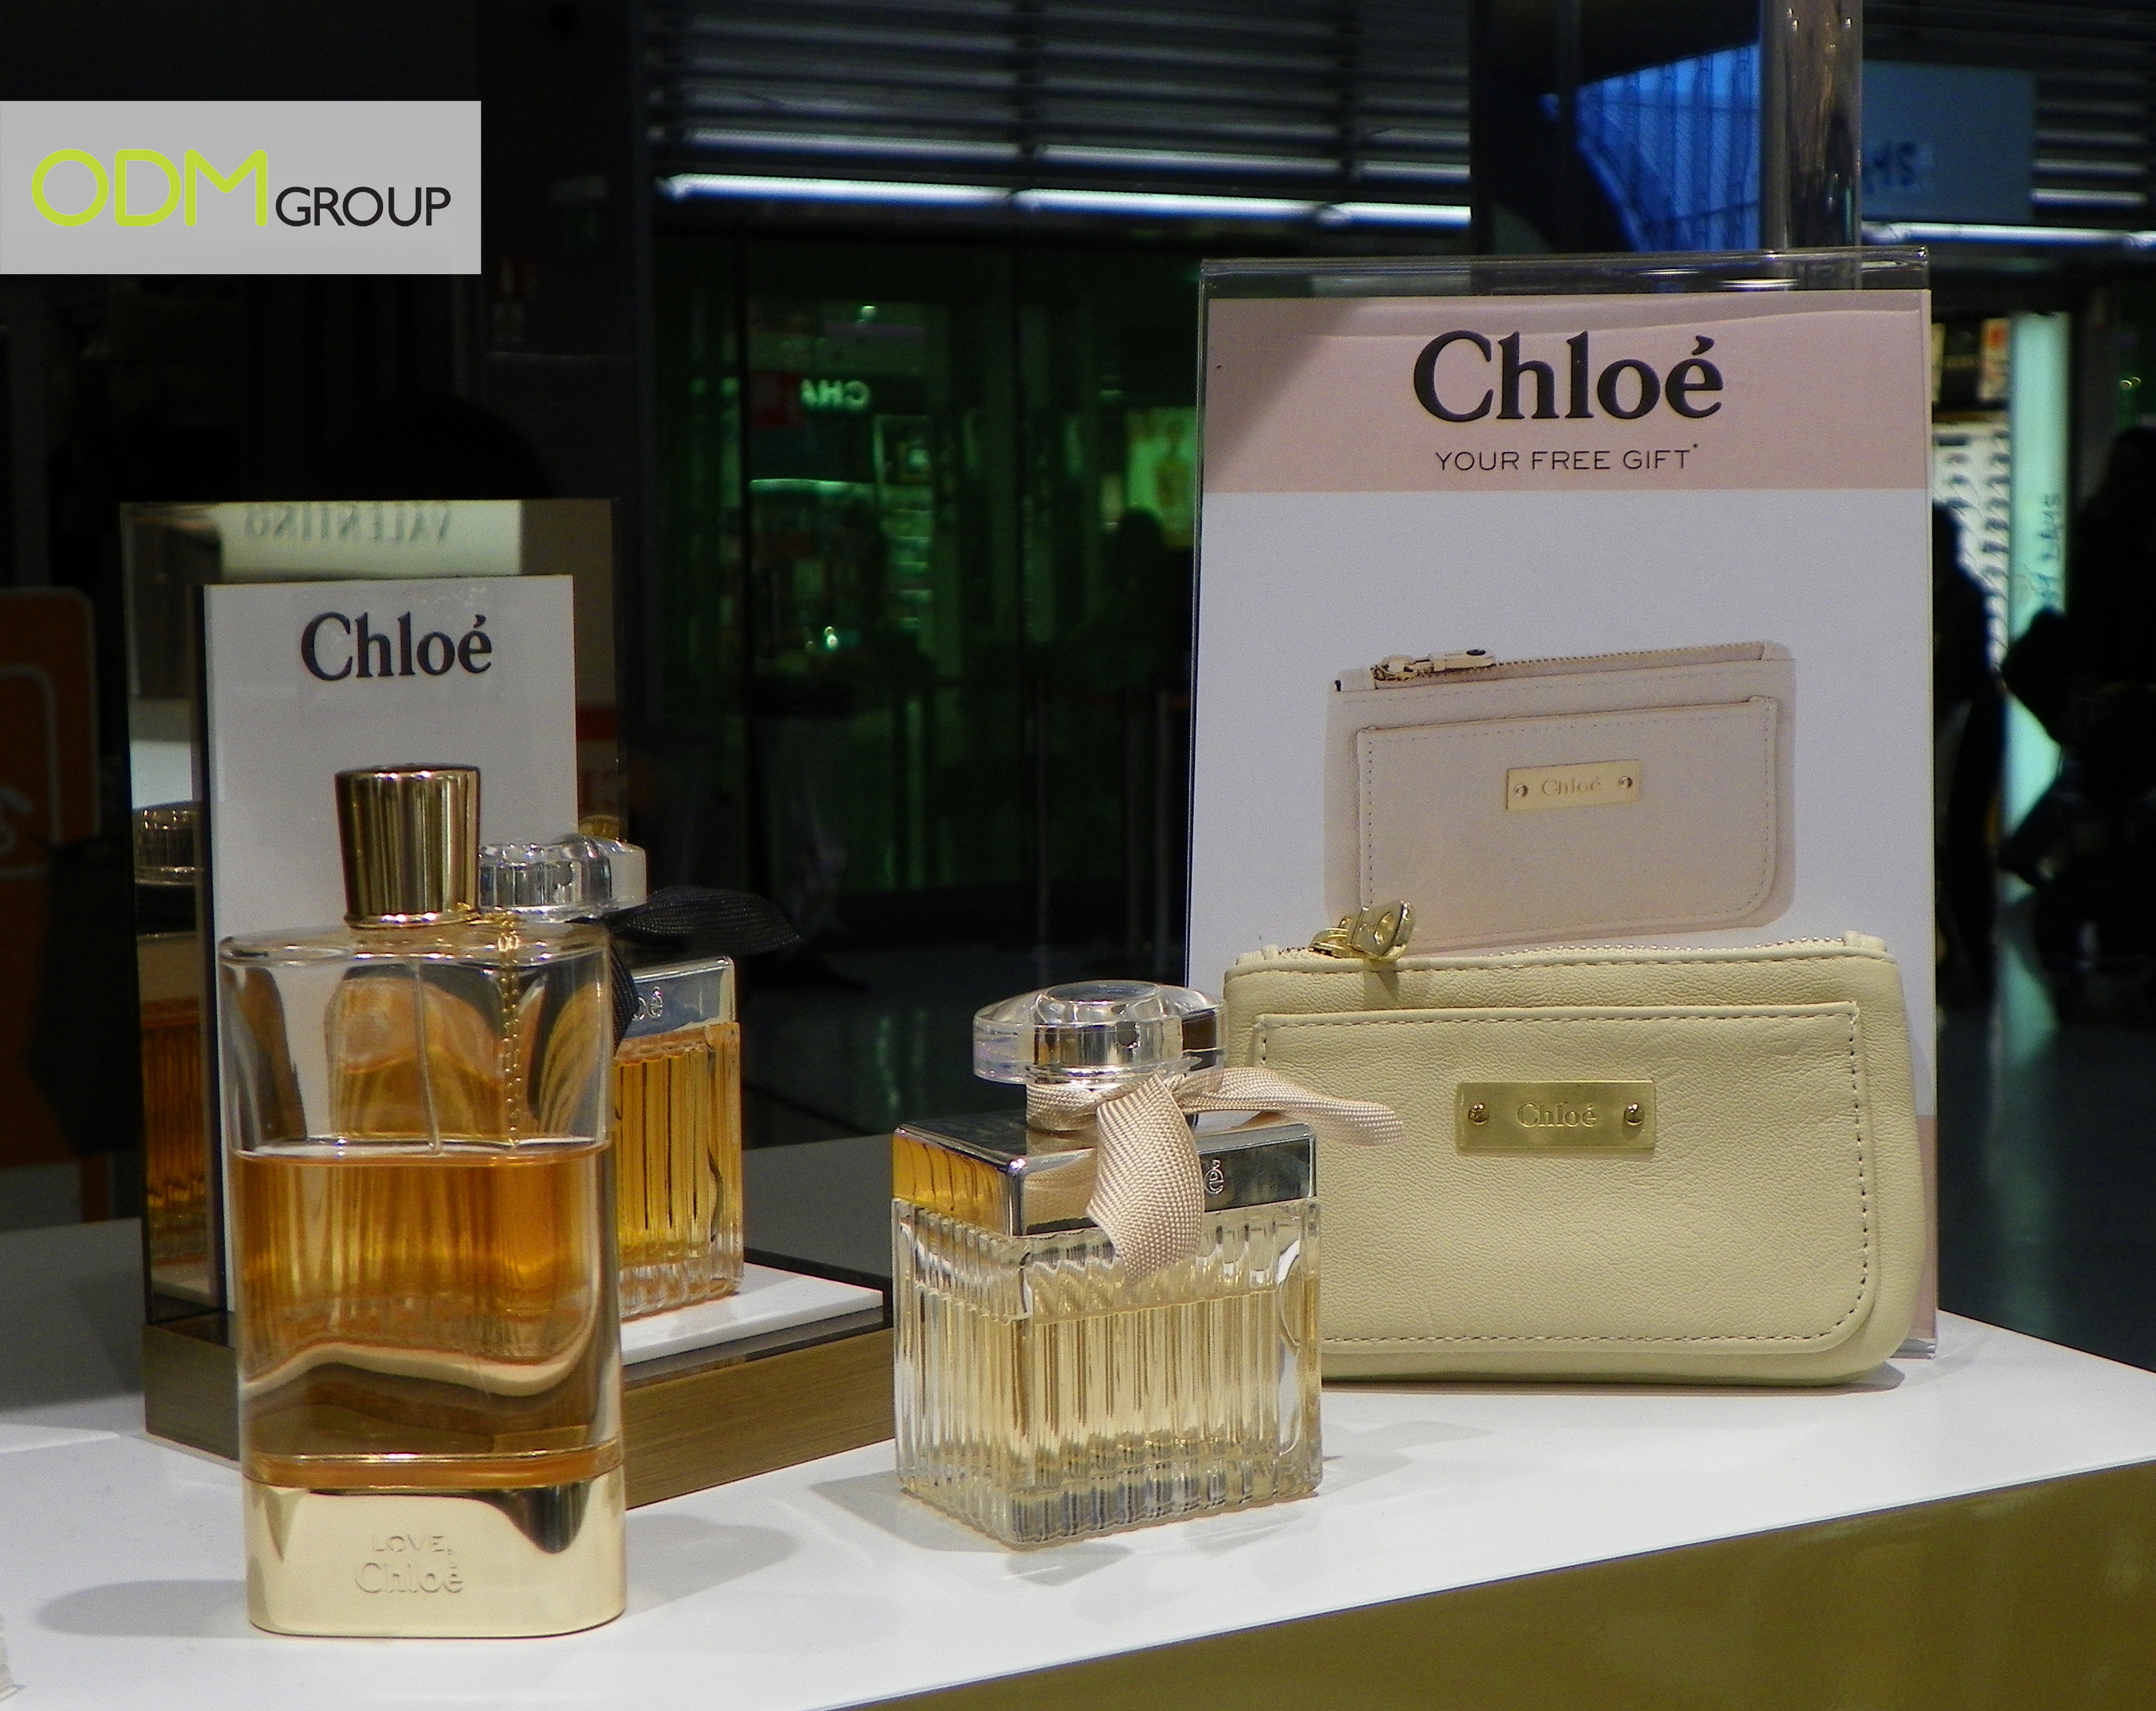 Brand New Suede Chloe Women's Clutch, Purse, Make-Up Bag Gift Set Free  Shipping | eBay